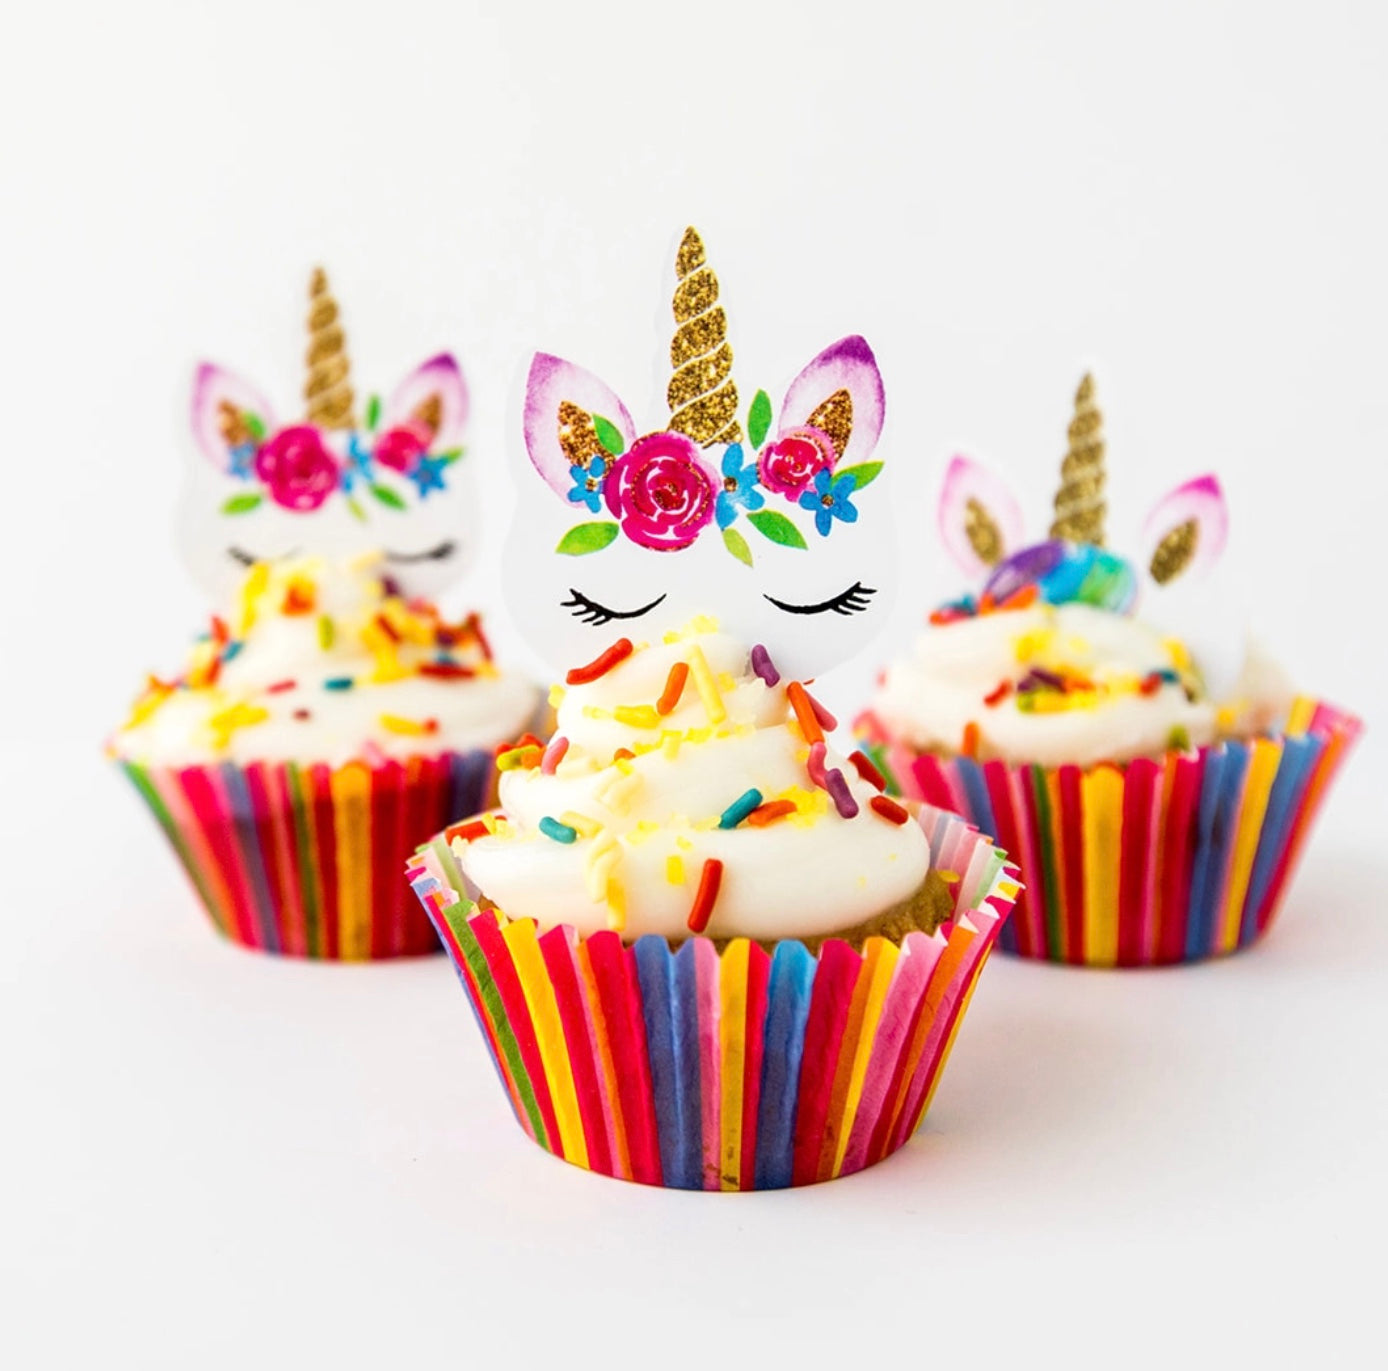 BUILD A PARTY & Make It A Cooking Party: Gluten-Free Unicorn Cupcake Baking Kit (Vegan!)